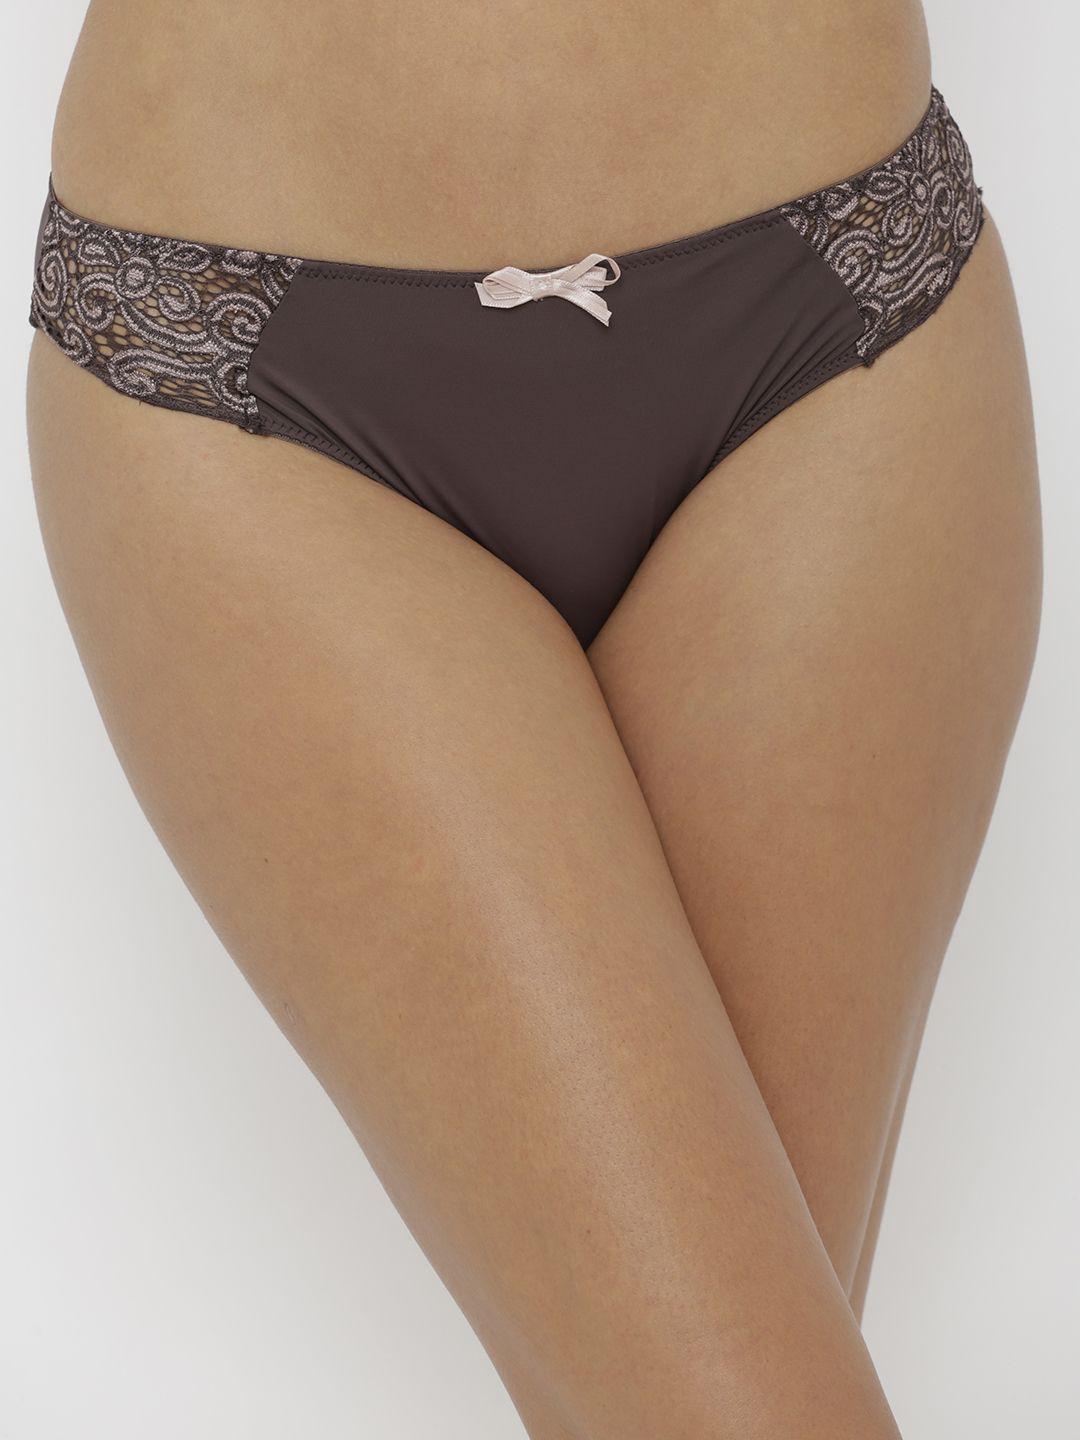 candour london women brown lace insert bikini briefs can20p219